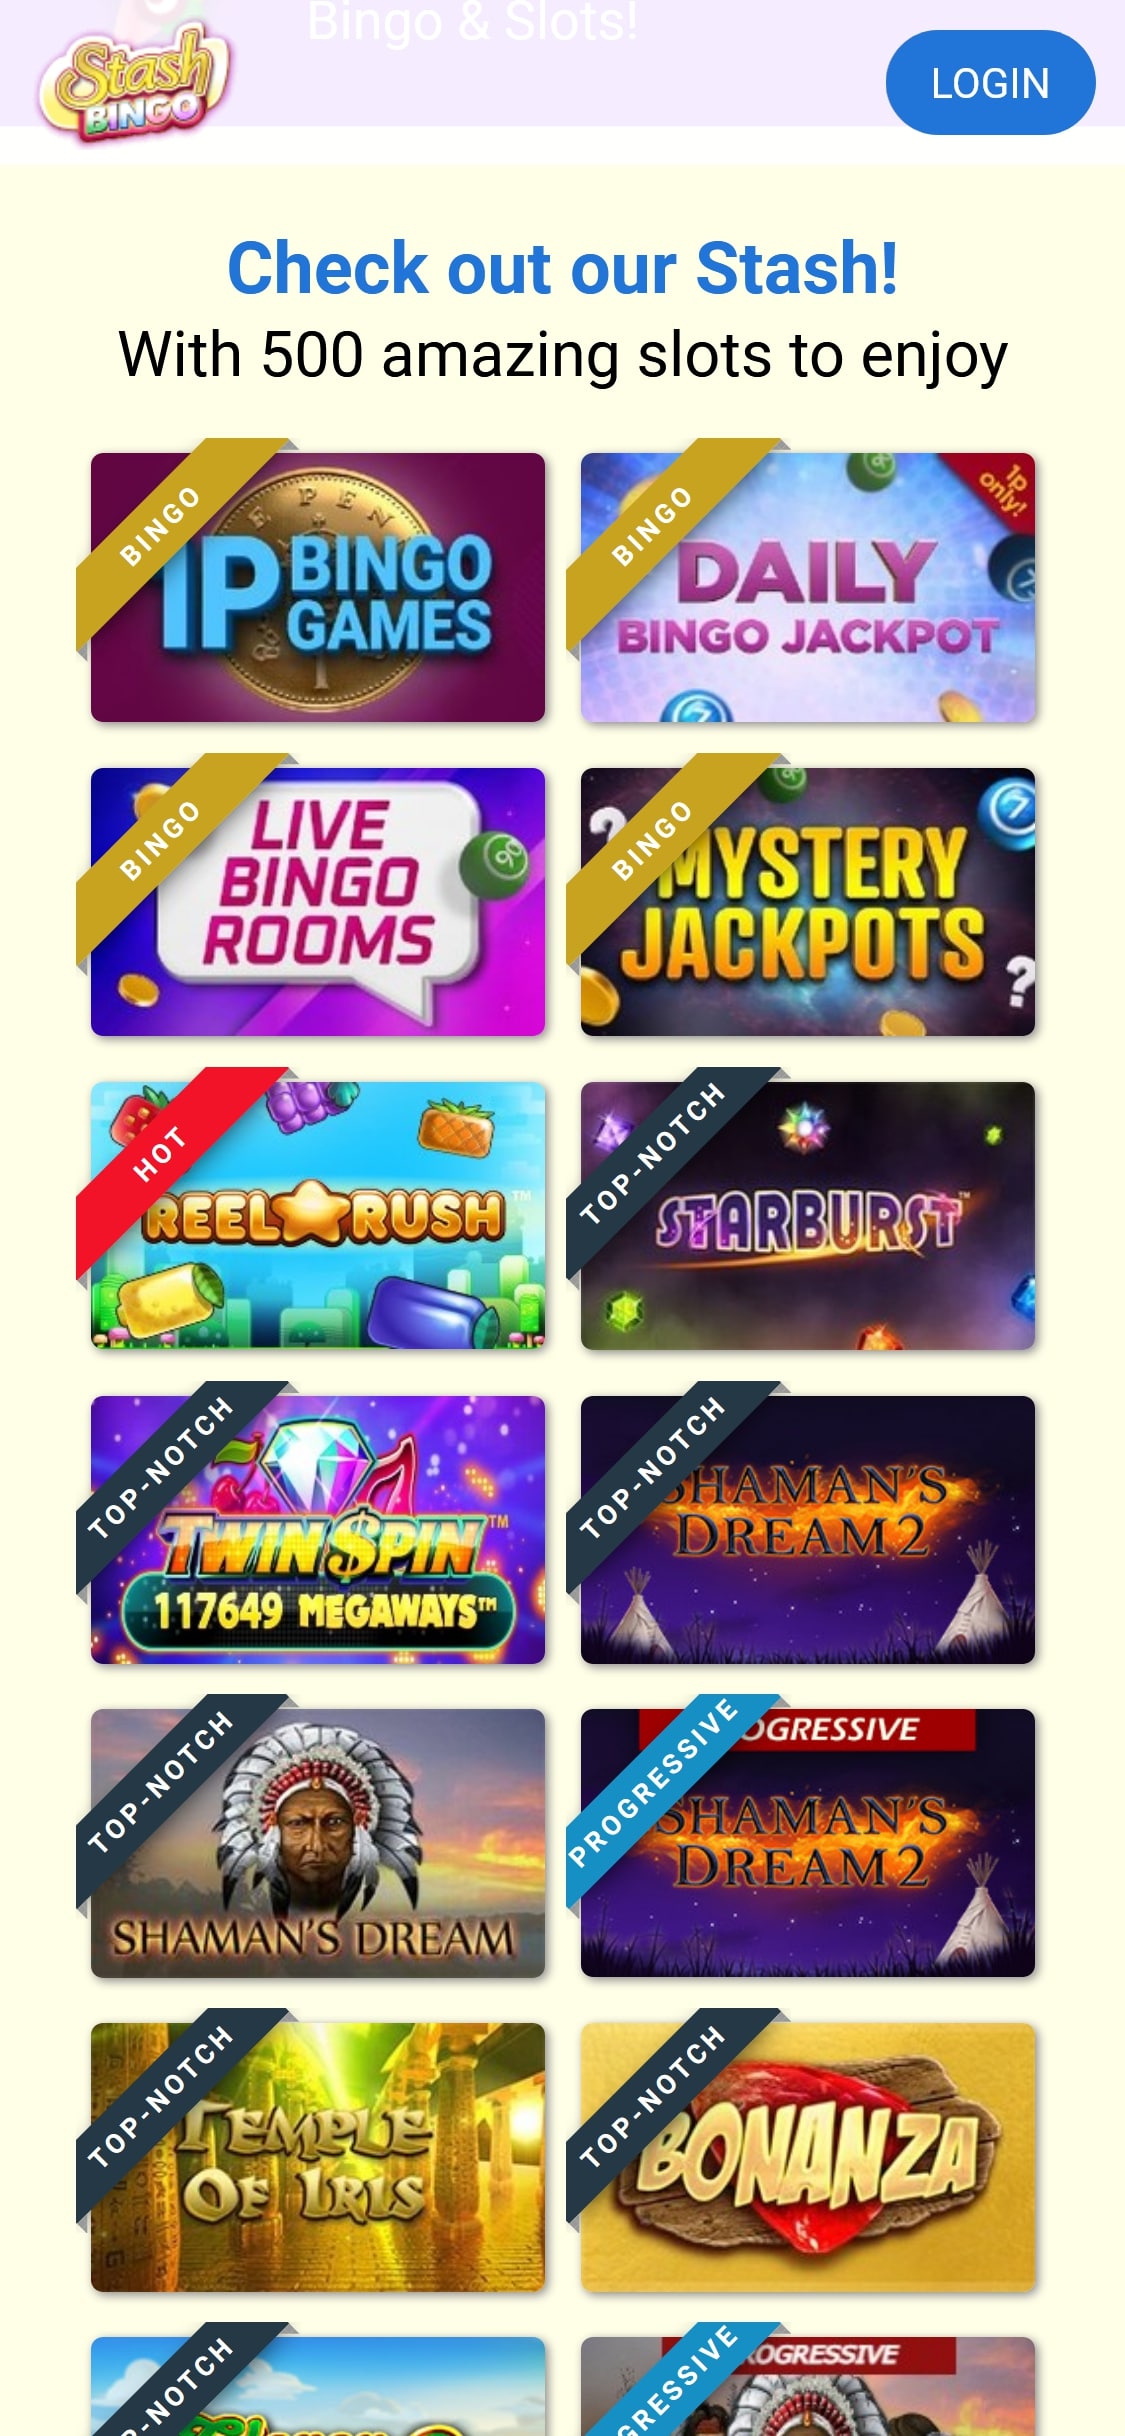 Stash Bingo Casino Mobile Games Review